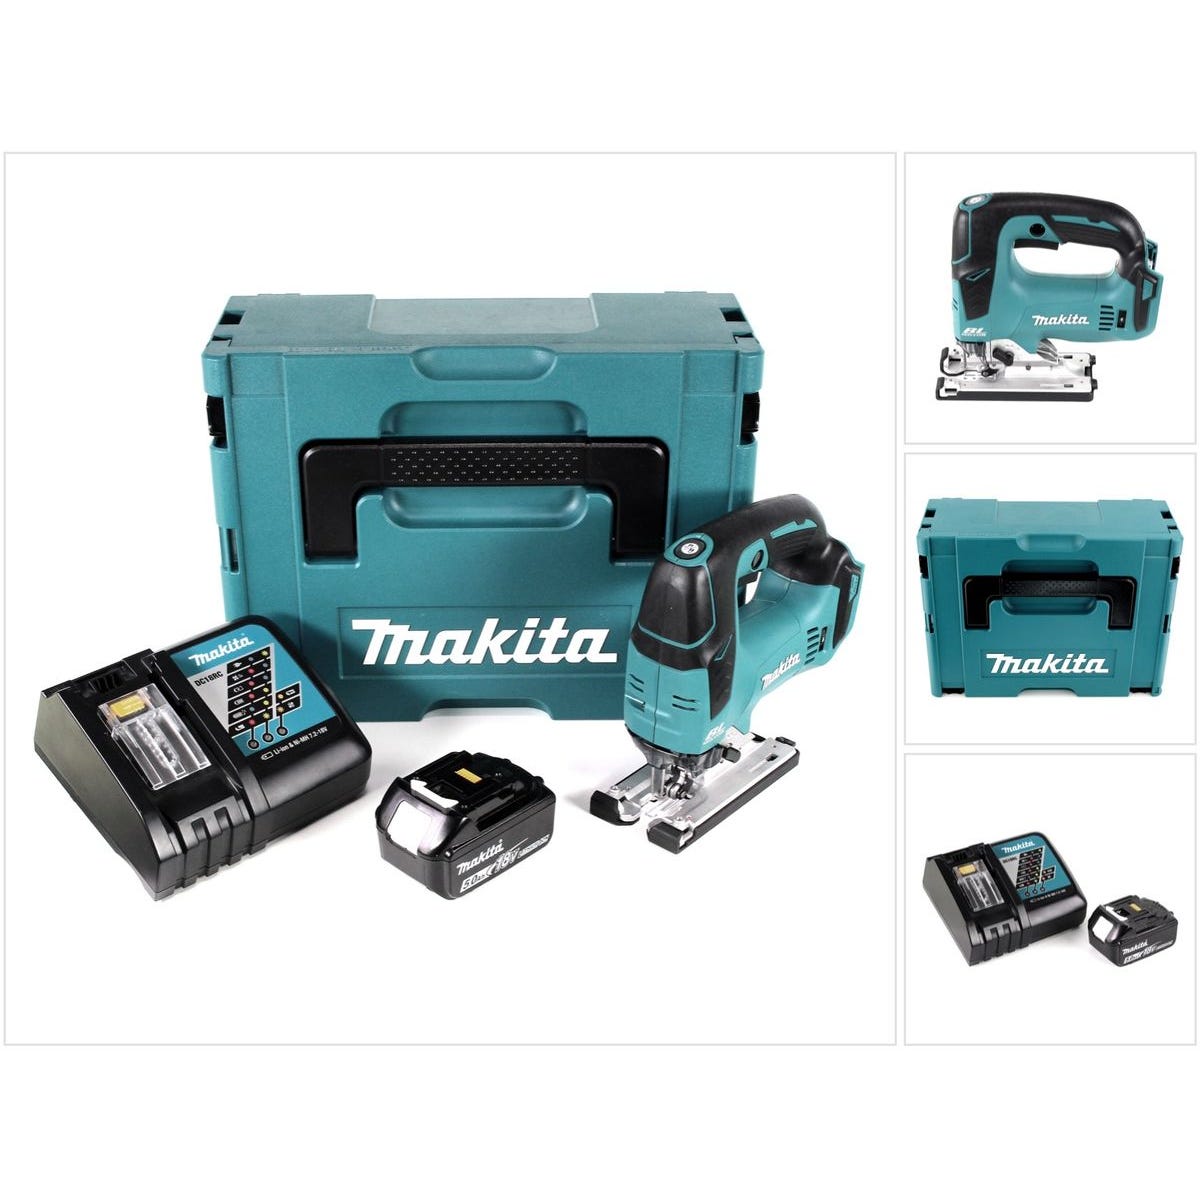 Makita DJV 182 RG1J Scie sauteuse sans fil 18V Brushless + 1x Batterie 5,0Ah + Chargeur + Coffret 4